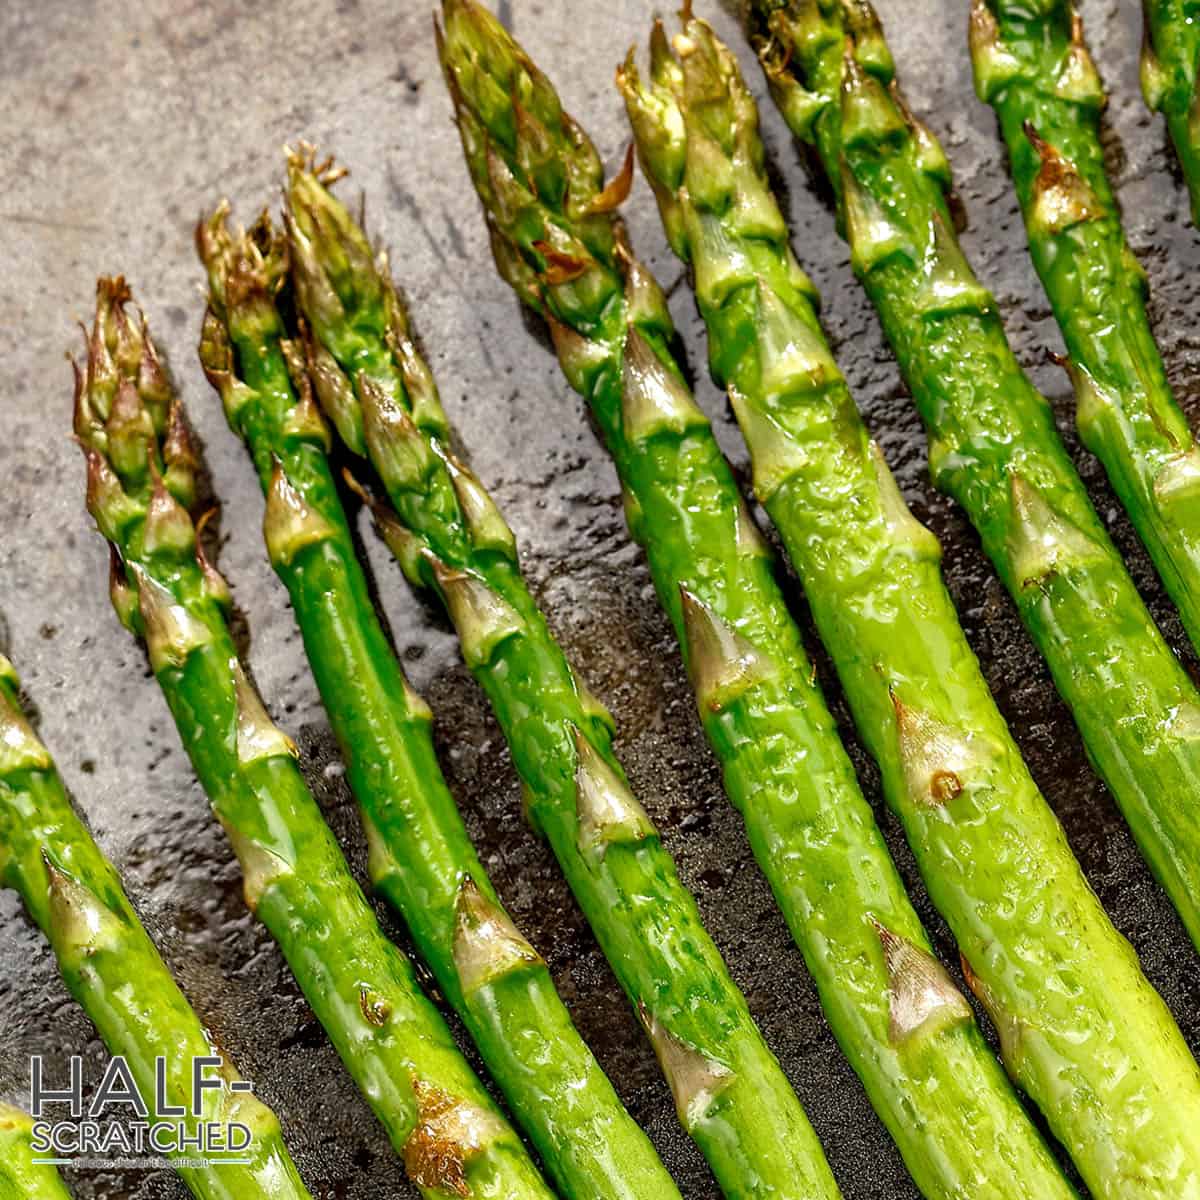 Oven asparagus